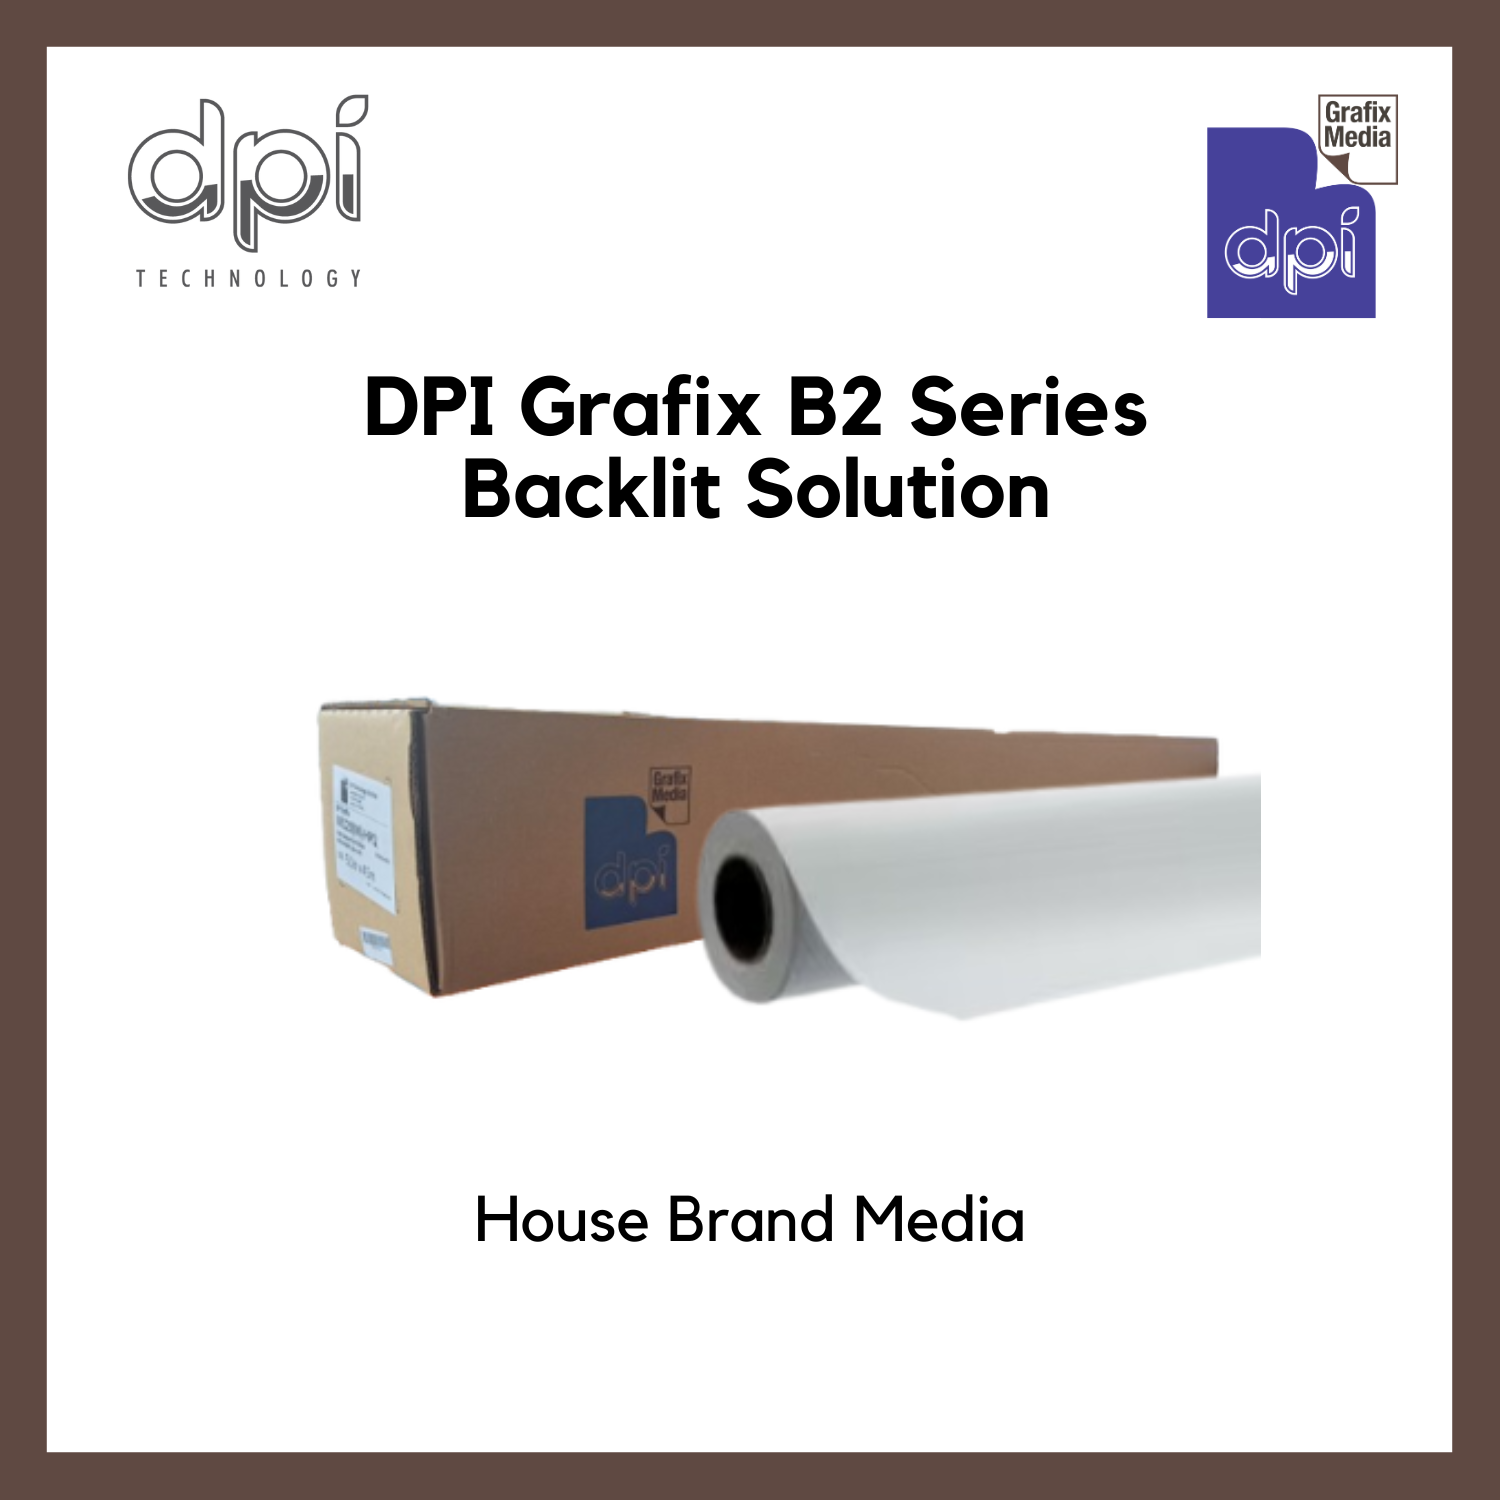 DPI Grafix B2 Series Backlit Solution